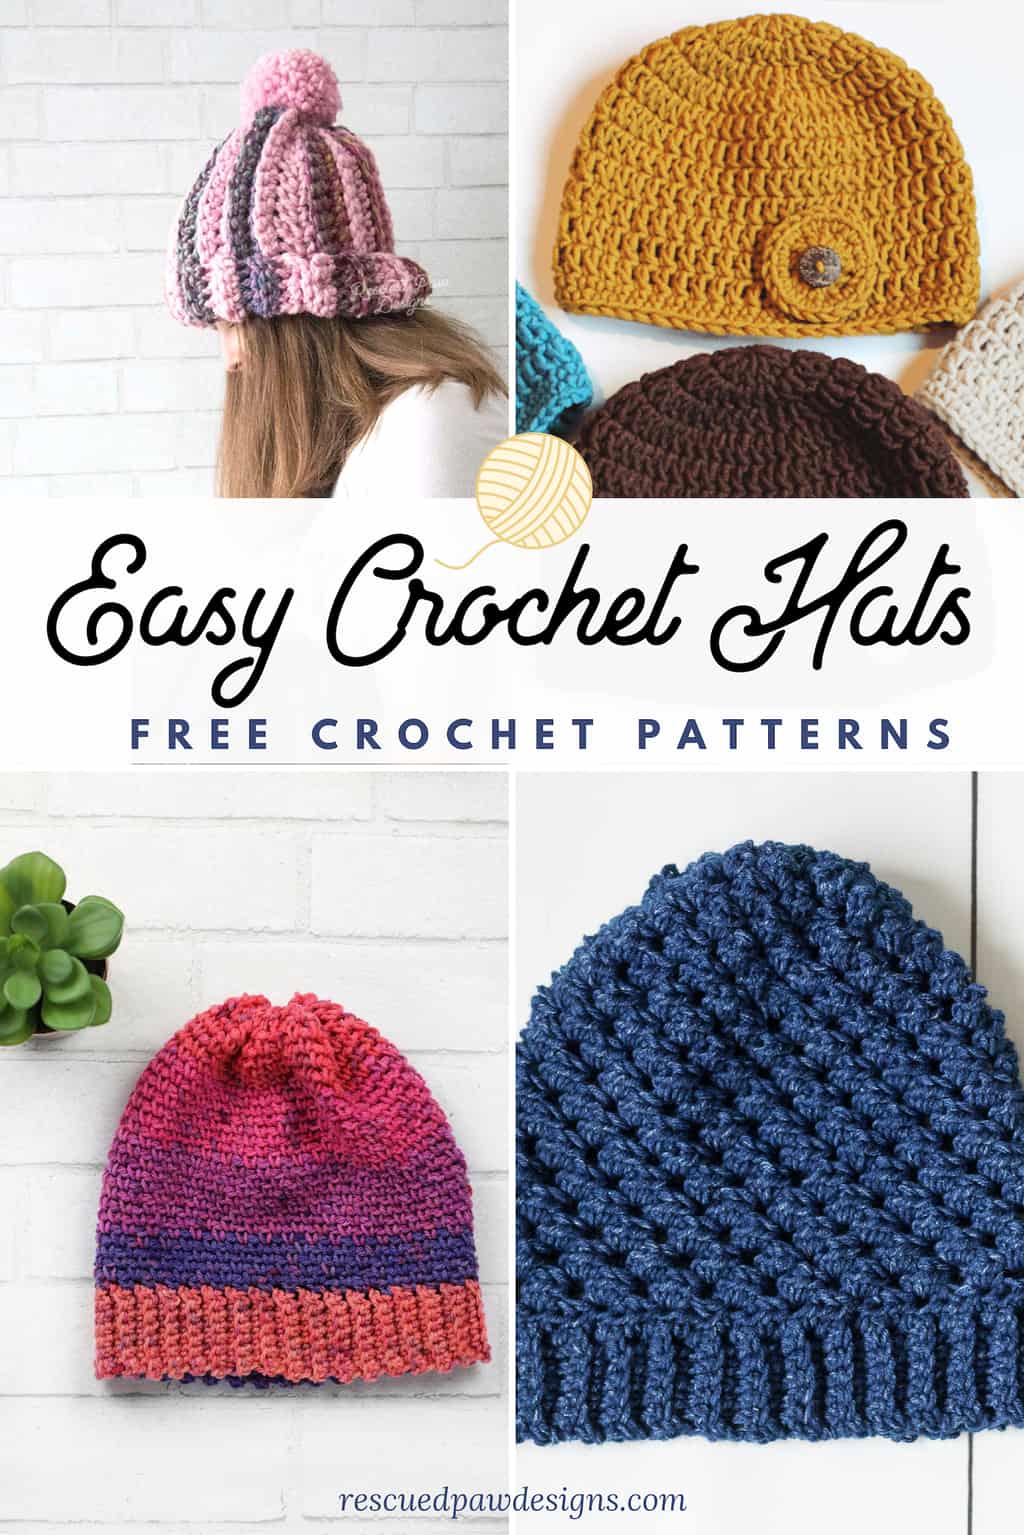 Easy Crochet Hat Patterns For Beginners Easycrochet Com,Yo Yo Quilt Tutorial